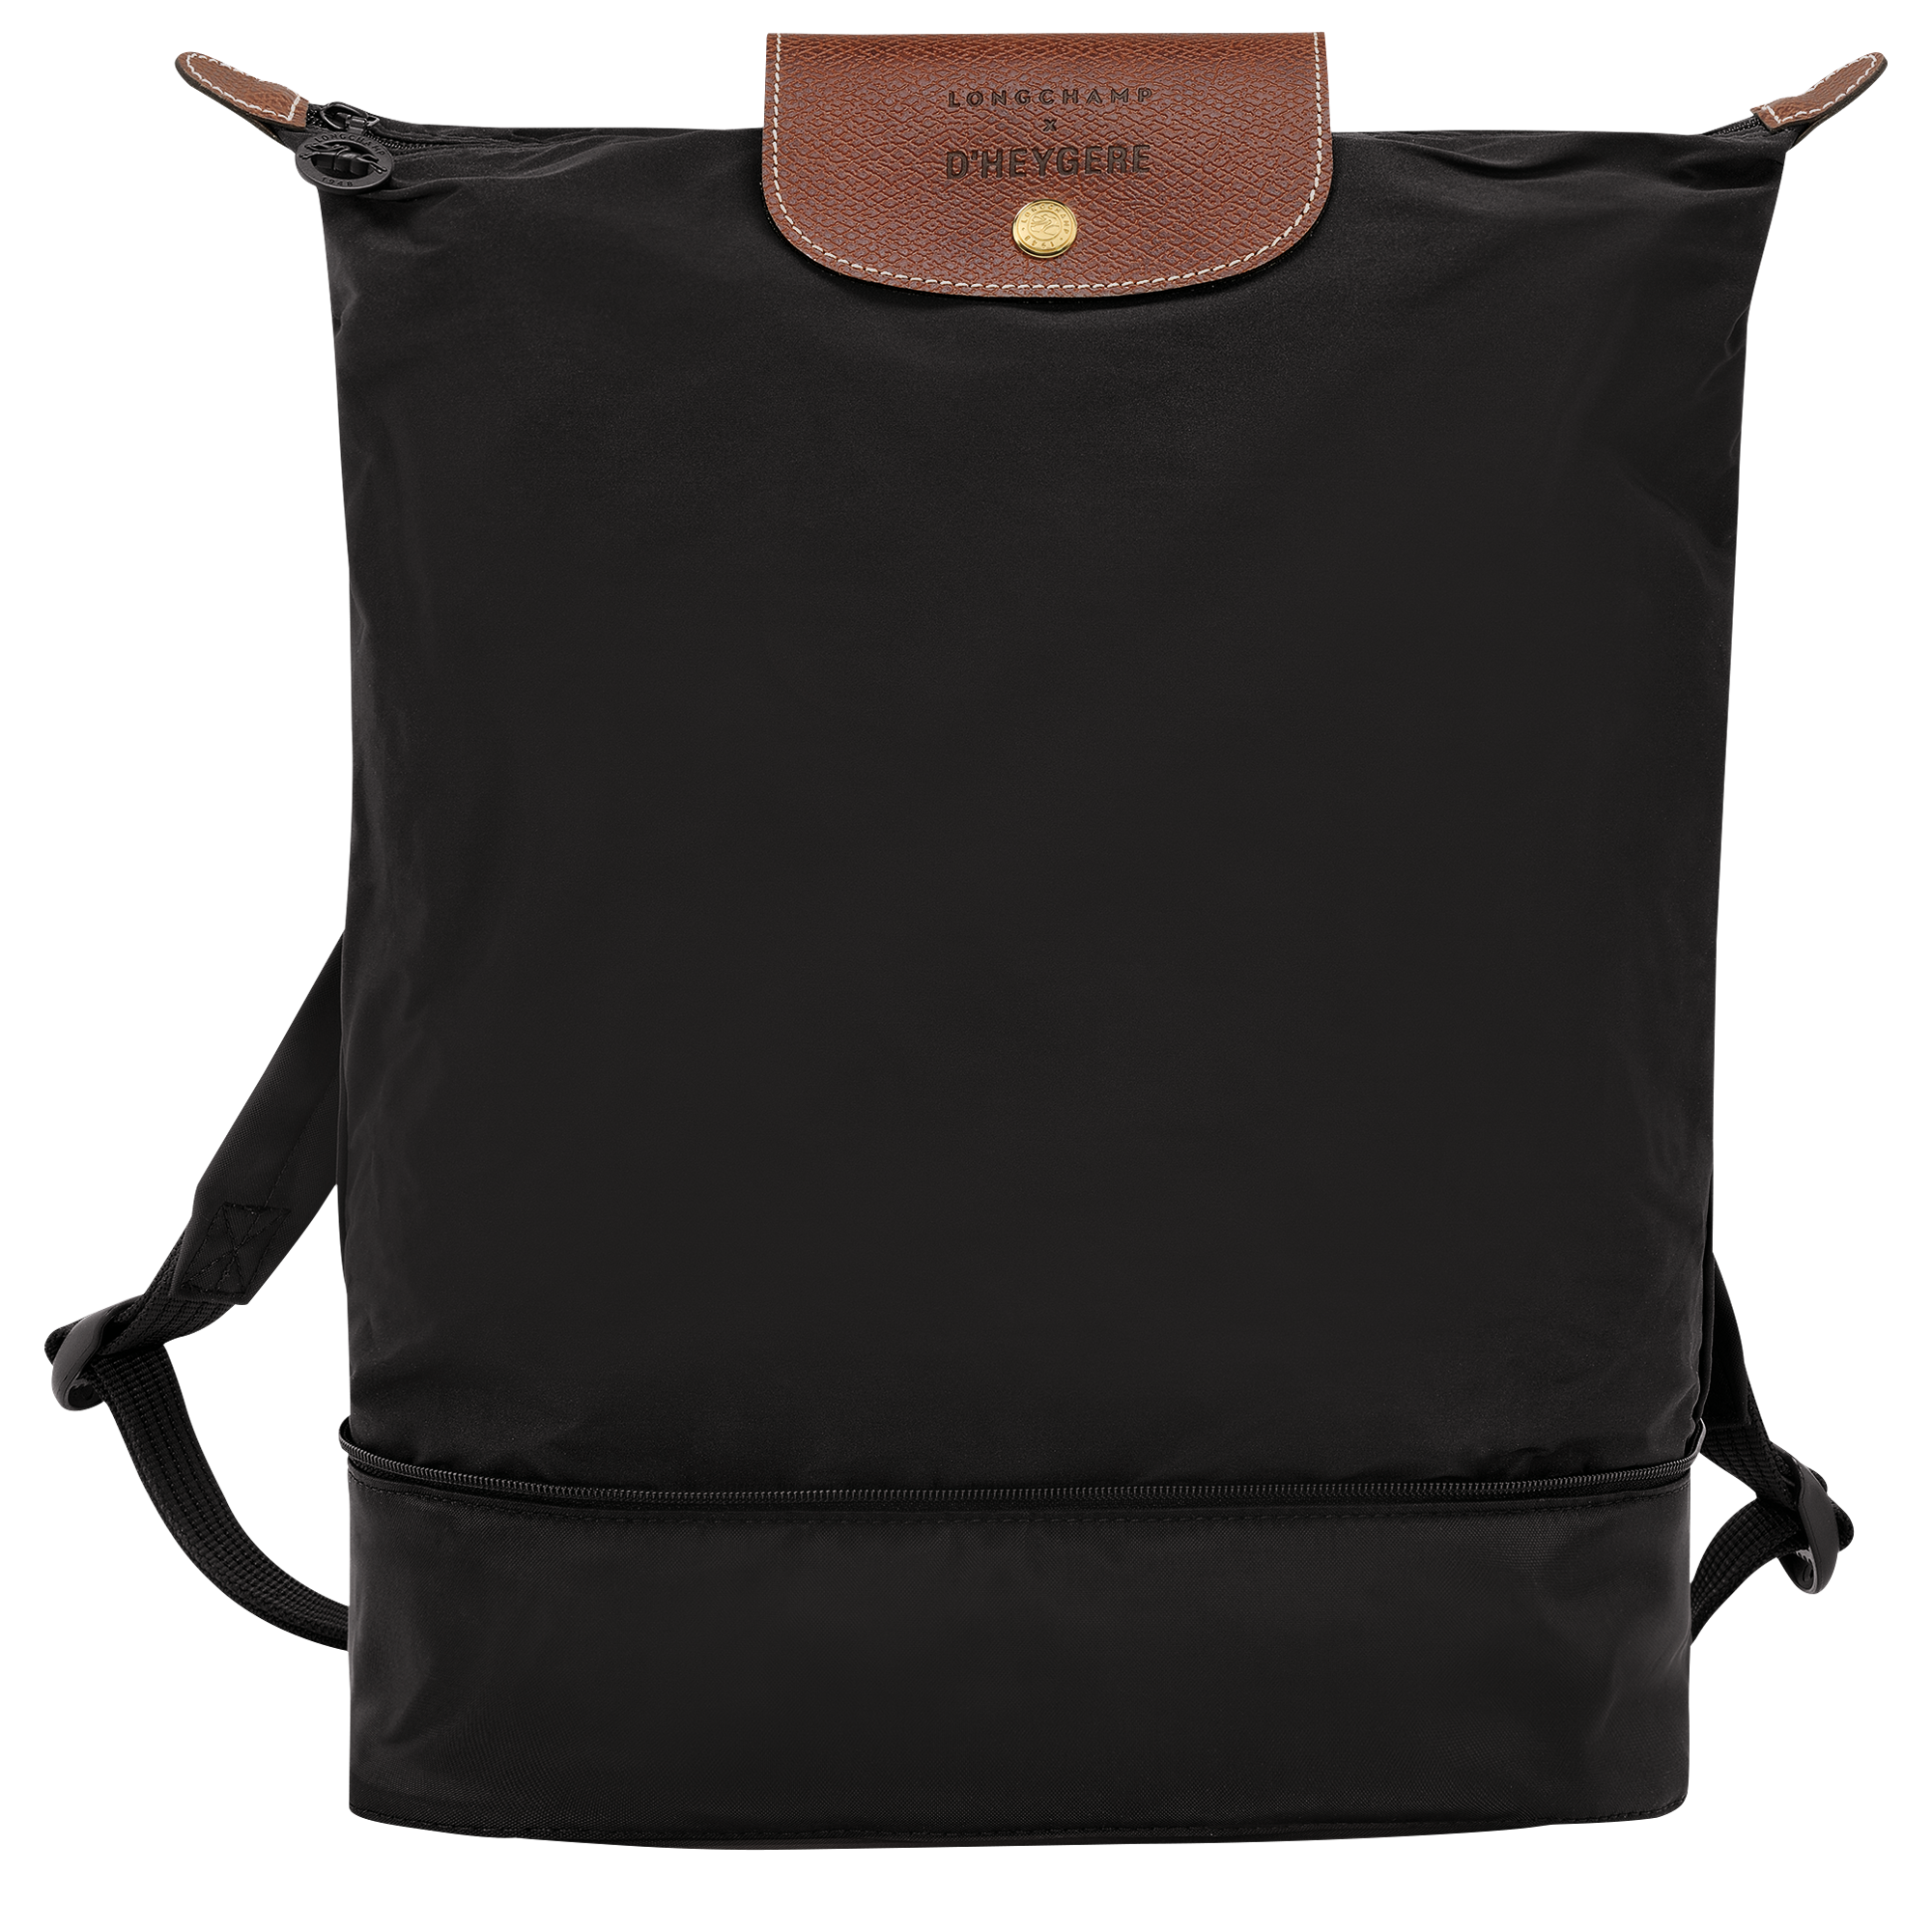 Longchamp X D_heygere black crossbody bag-backpack Php 25,500 (2).png